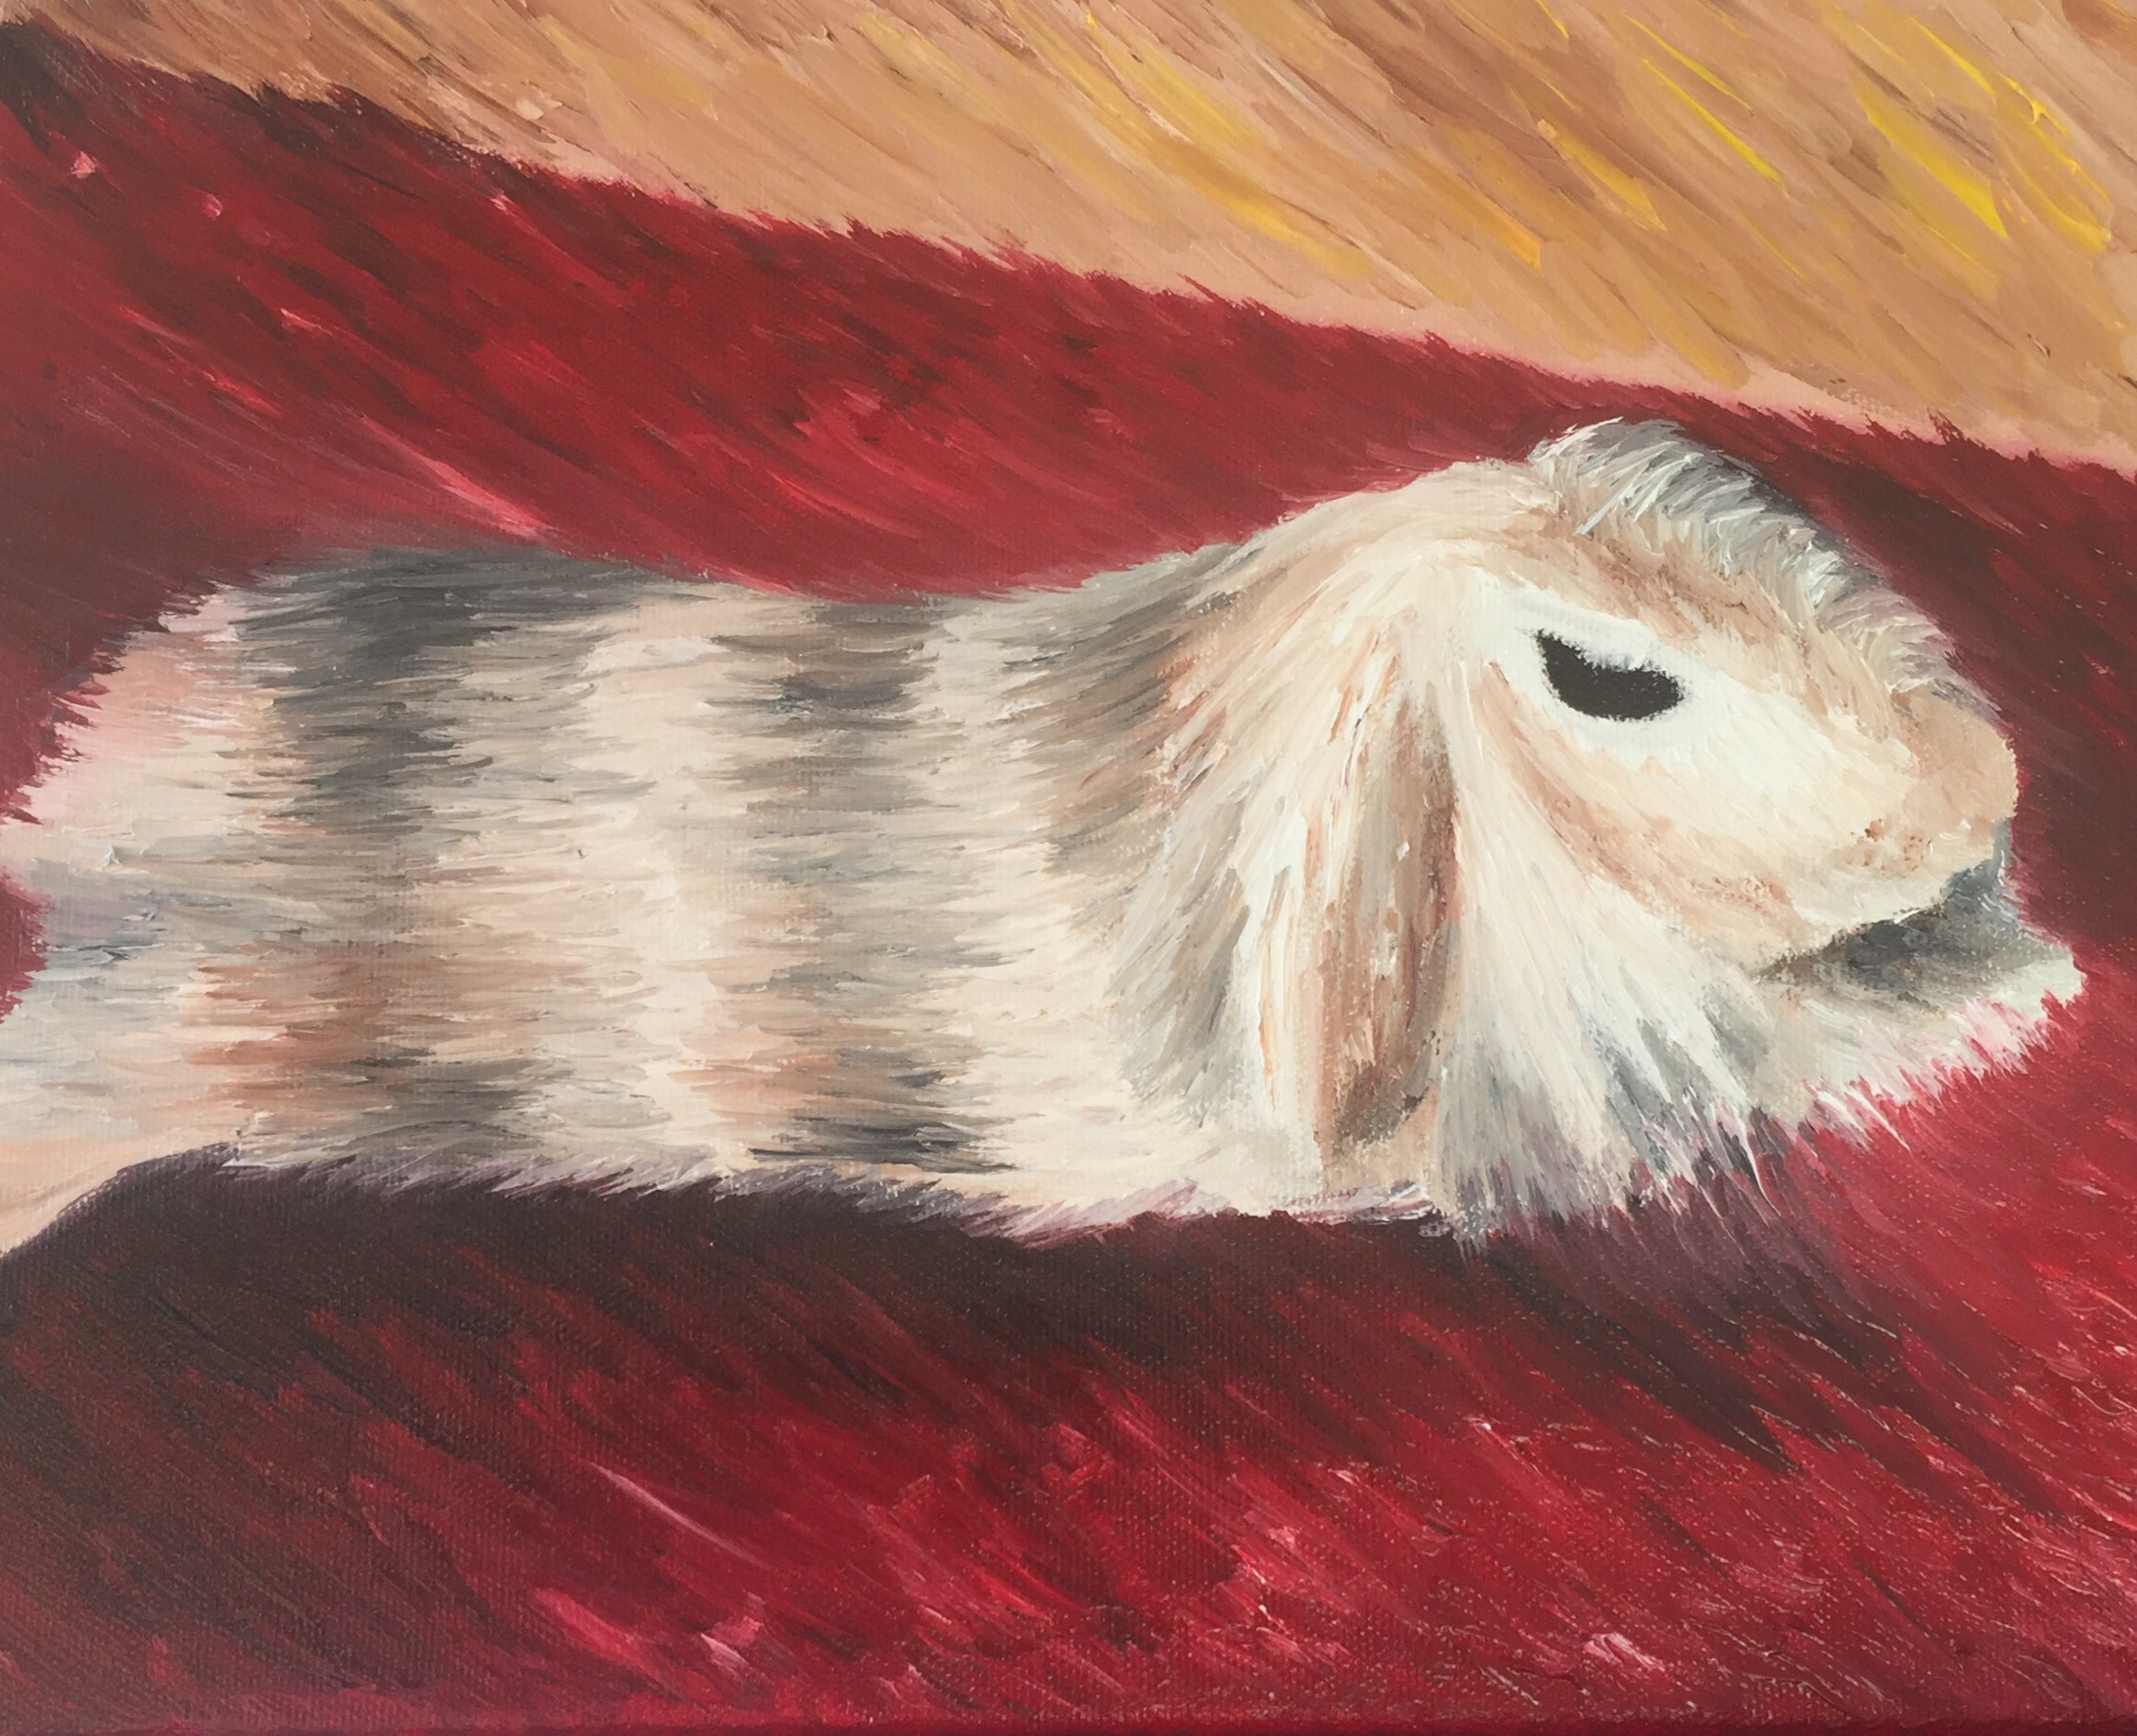 In opdracht: Rustig konijn. Techniek: Olieverf.
Afmeting 23,5 cm x 30 cm